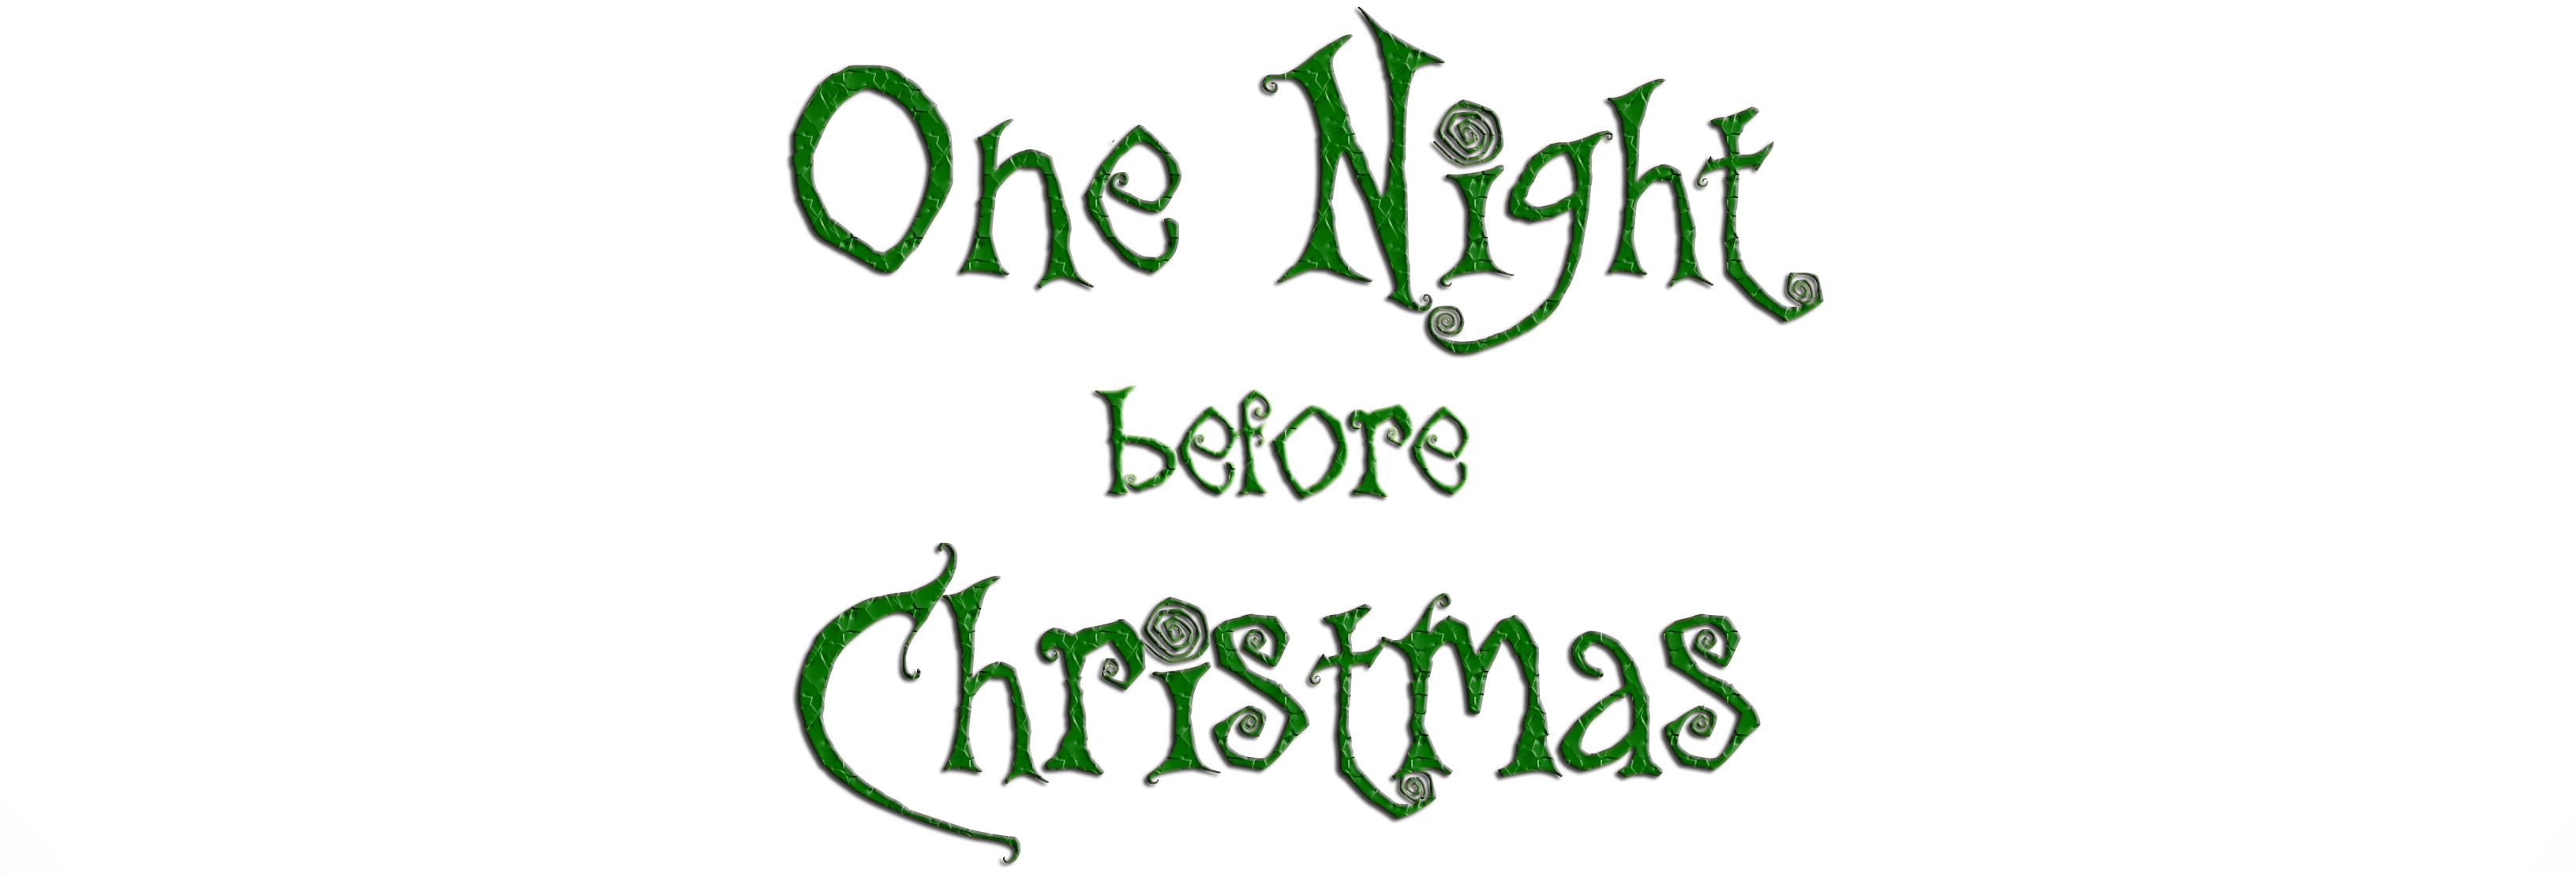 One Night Before Christmas